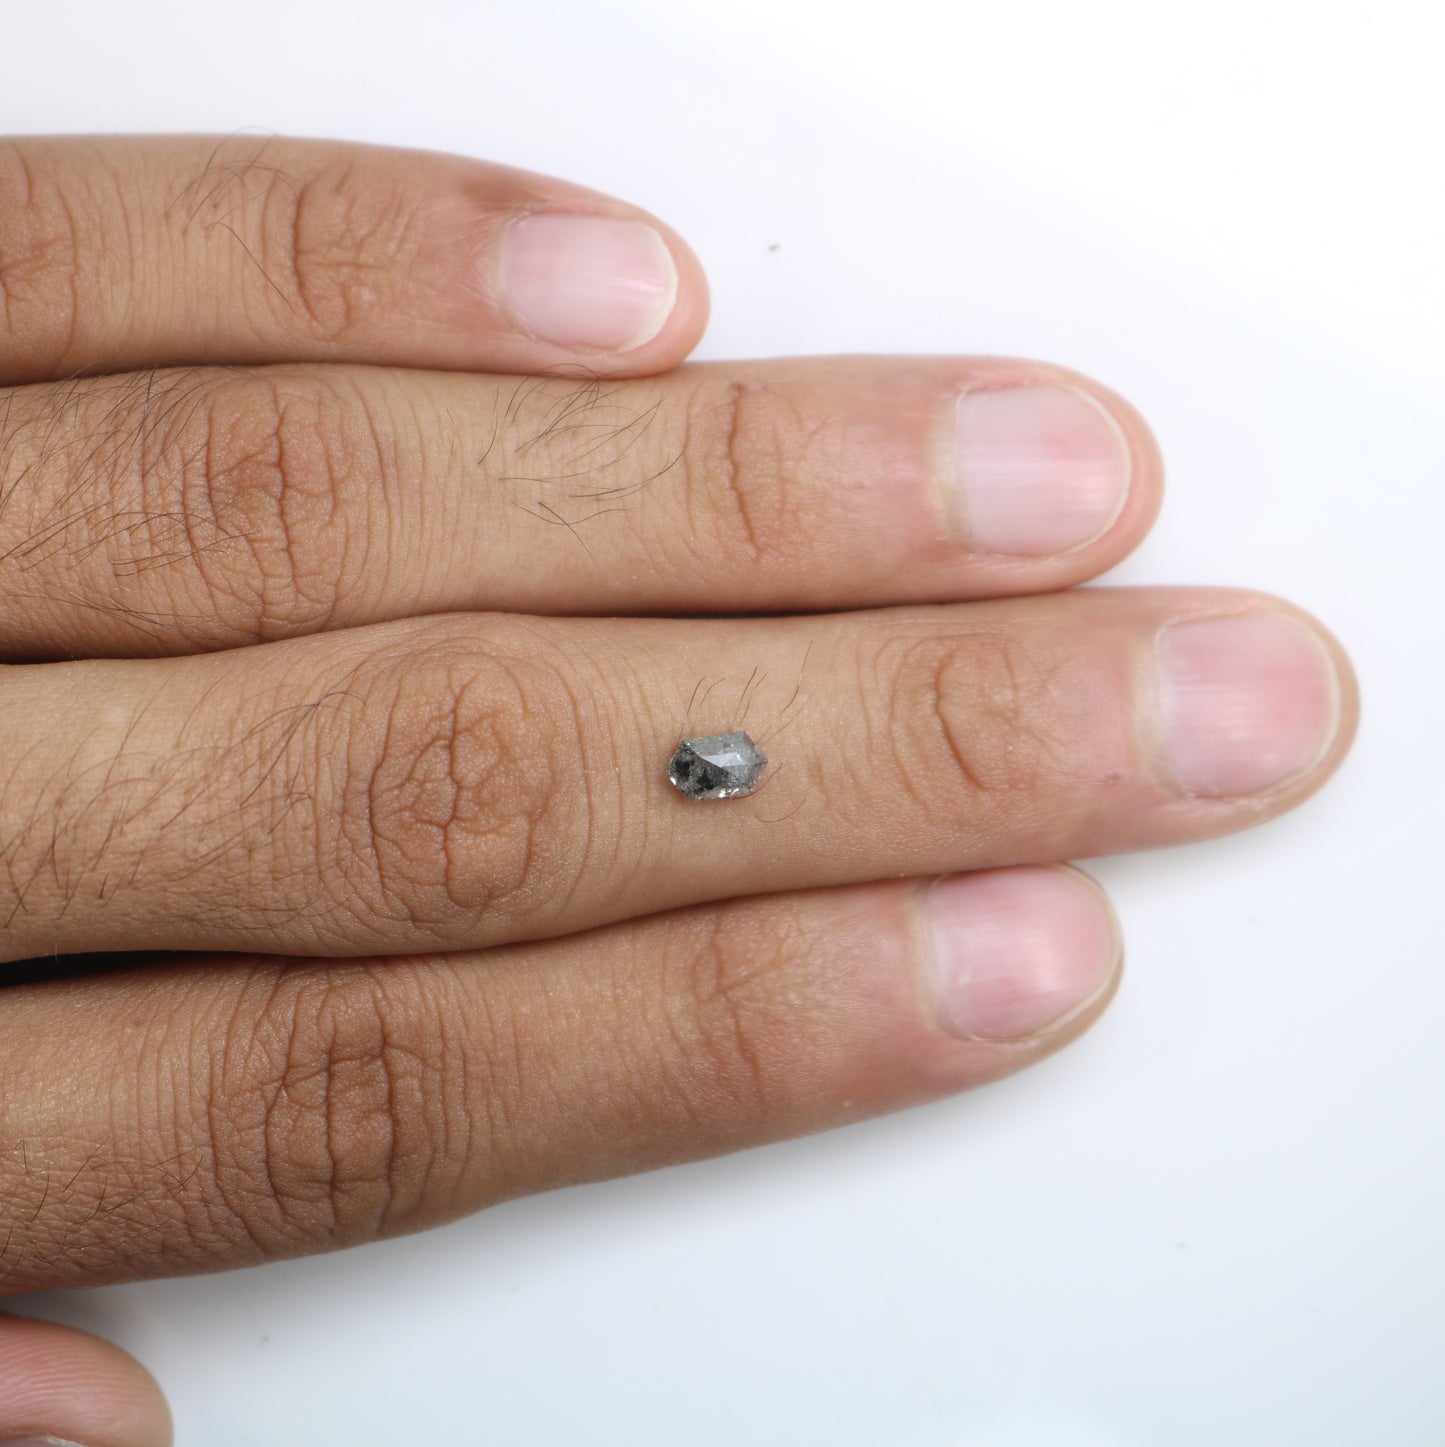 0.78 CT Salt And Pepper Elongated Hexagon Shape Diamond For Engagement Ring